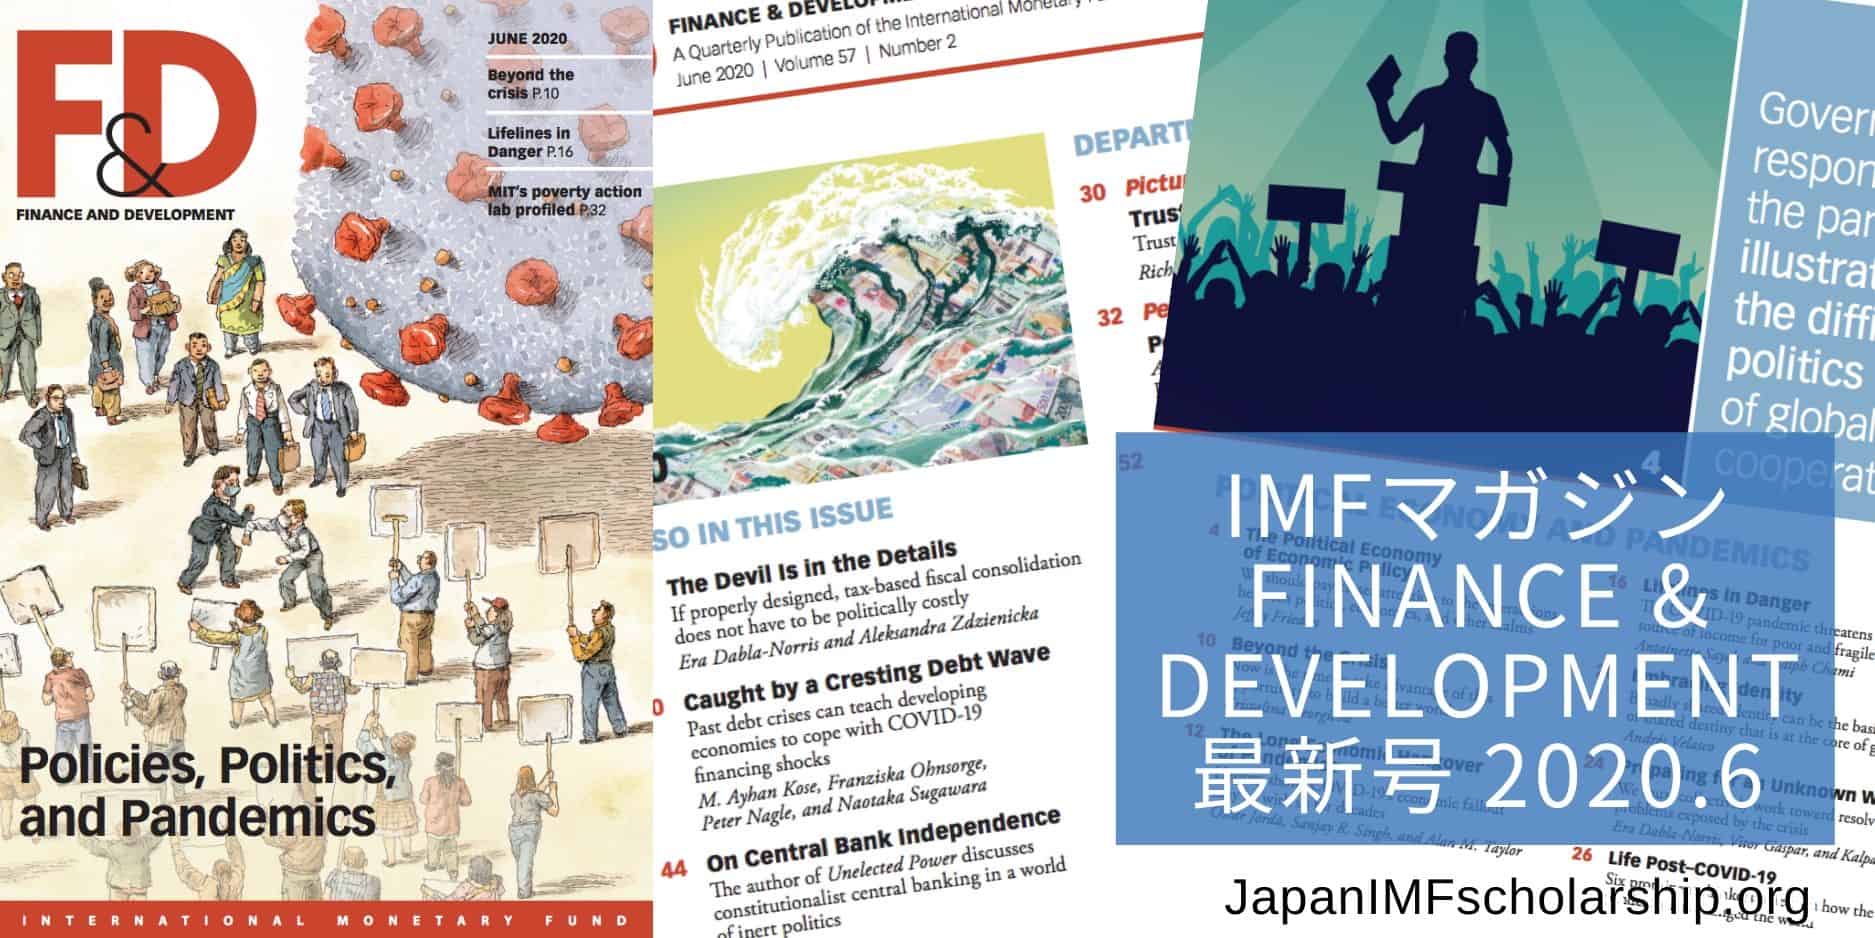 jisp web-fb imf magazine finance and development policies, politics and pandemics june 2020